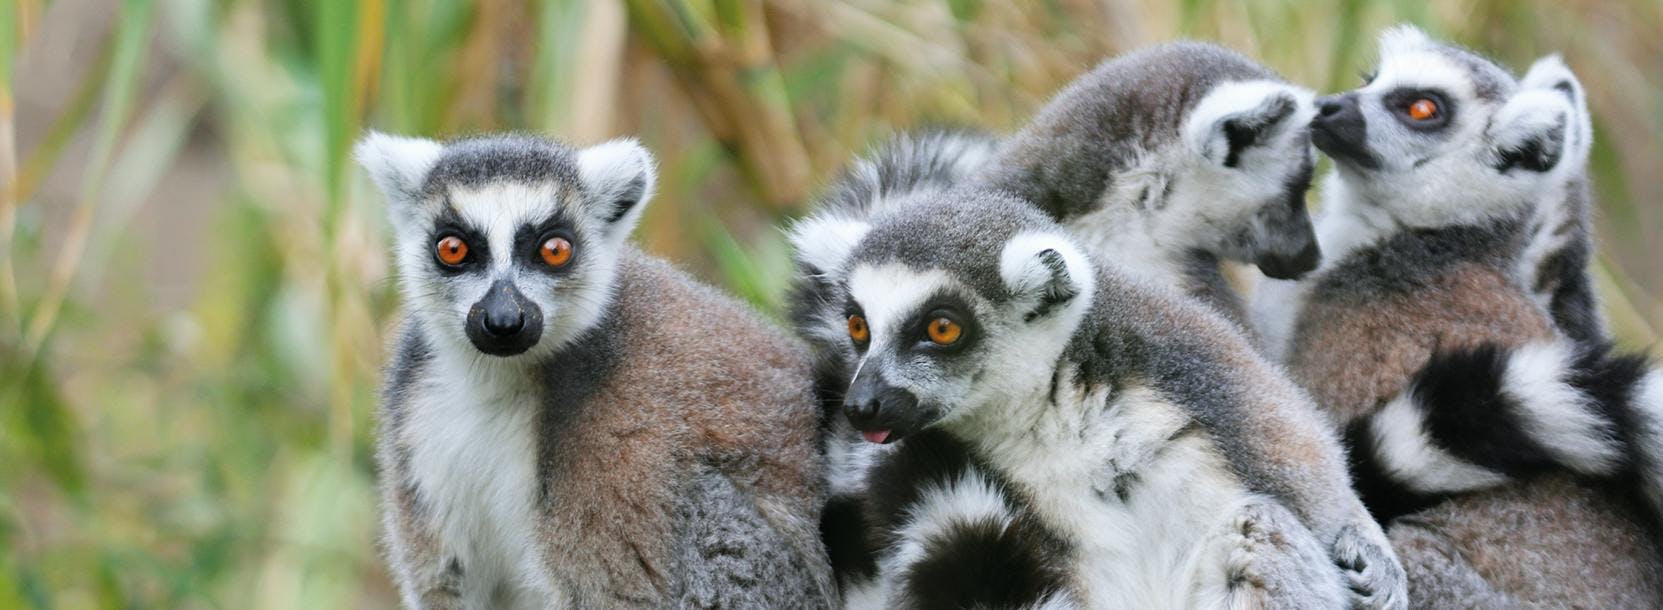 lemur wildlife mammal animal dog canine pet